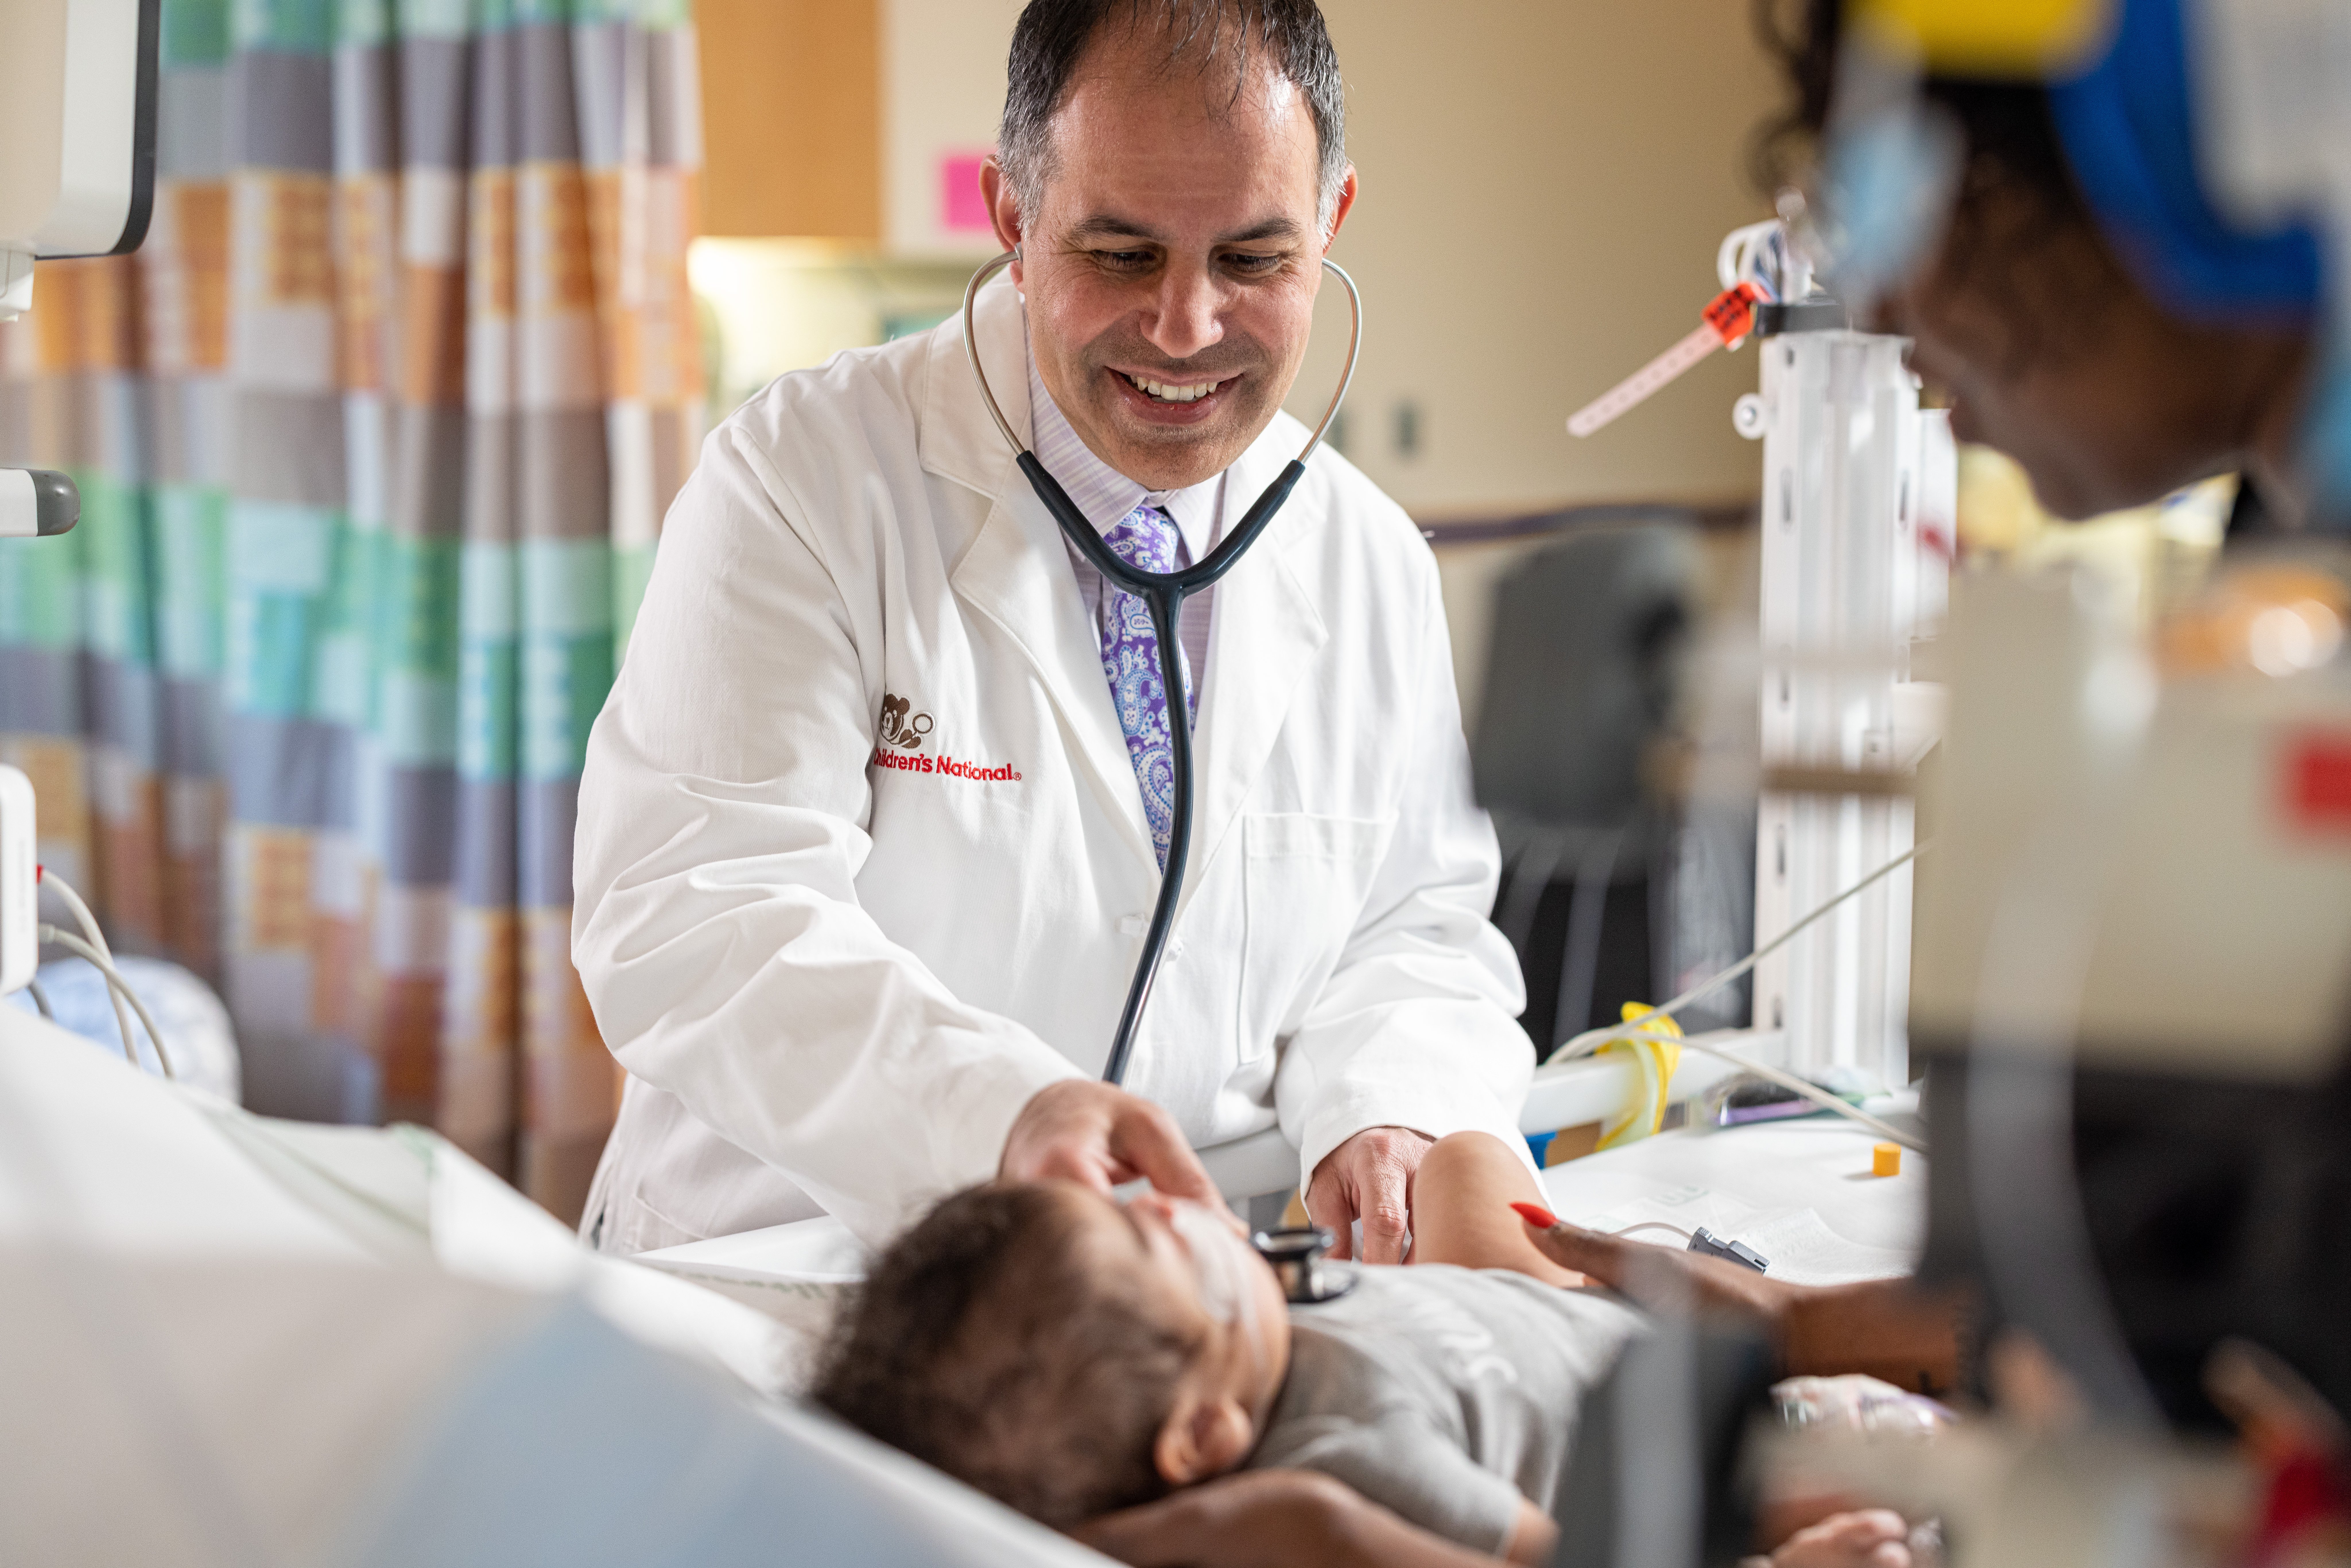 Pediatric cardiologist, Ashraf Saud Harahsheh, M.D, checks a patient’s pulse.